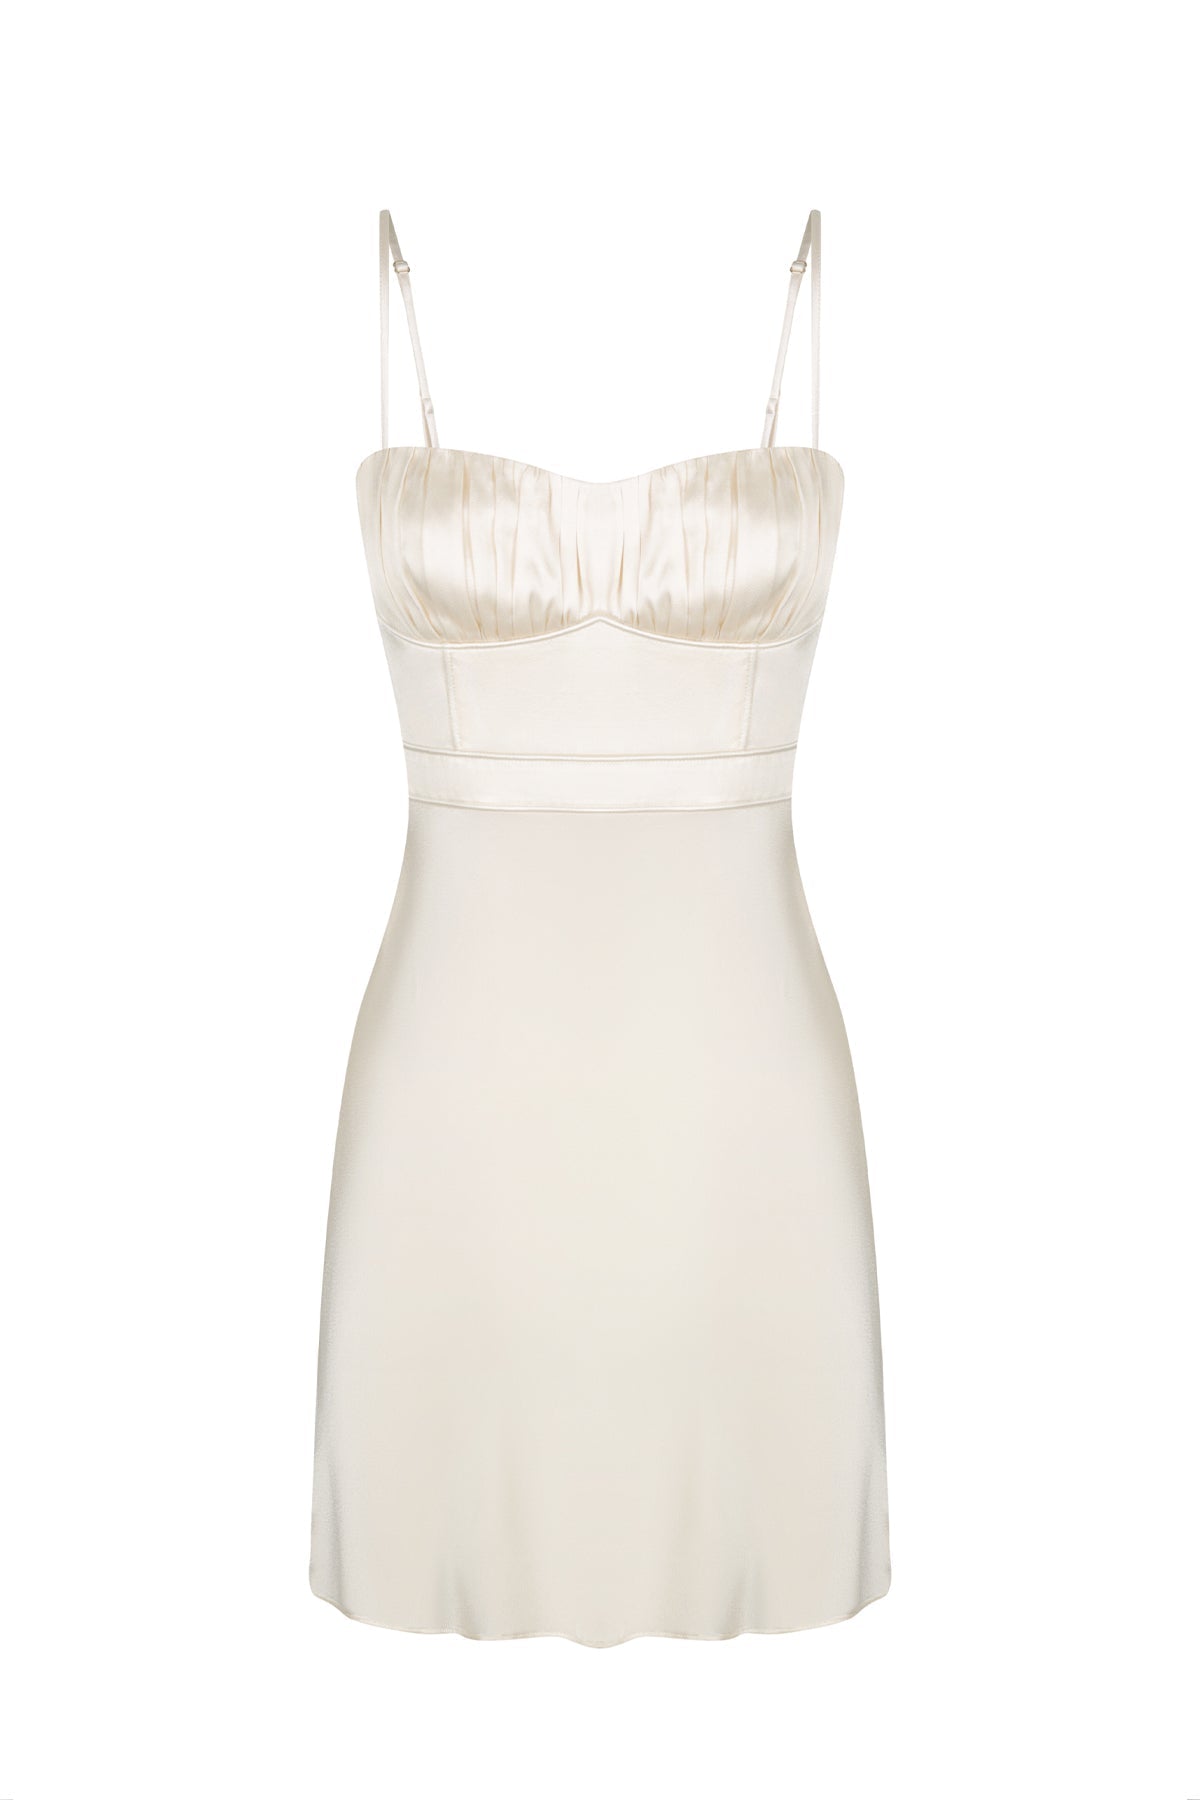 Shona Joy La Lune Bustier Mini Dress- Cream